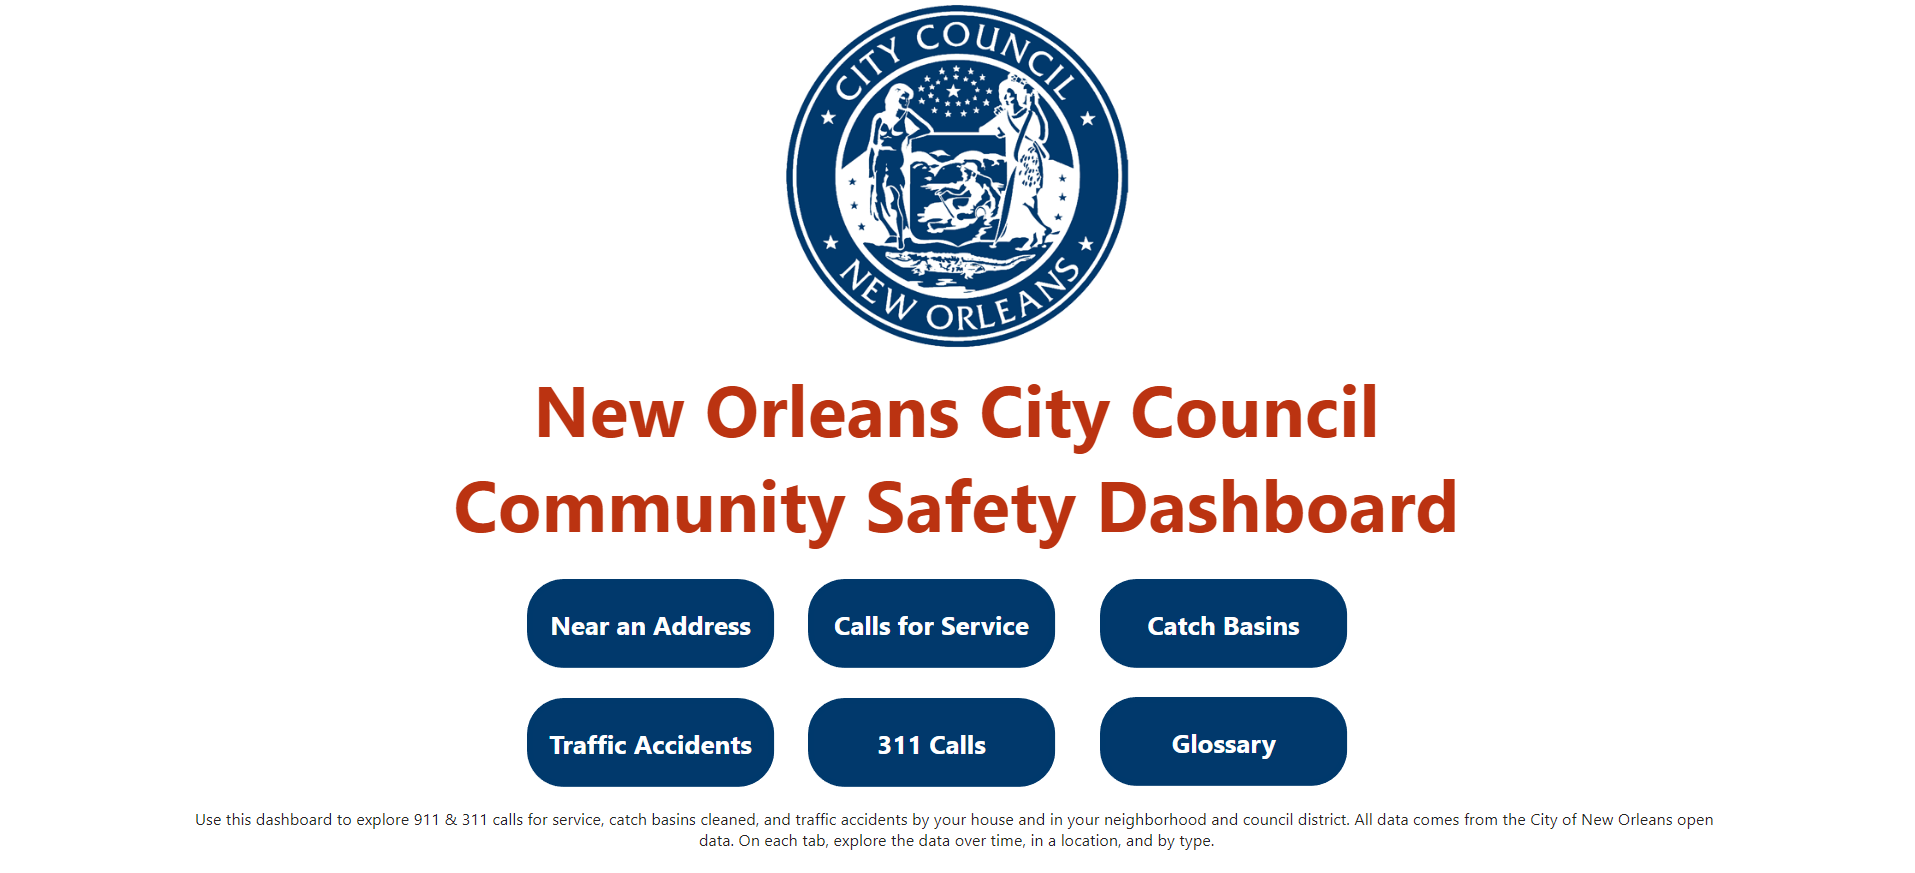 Community Safety Dashboard